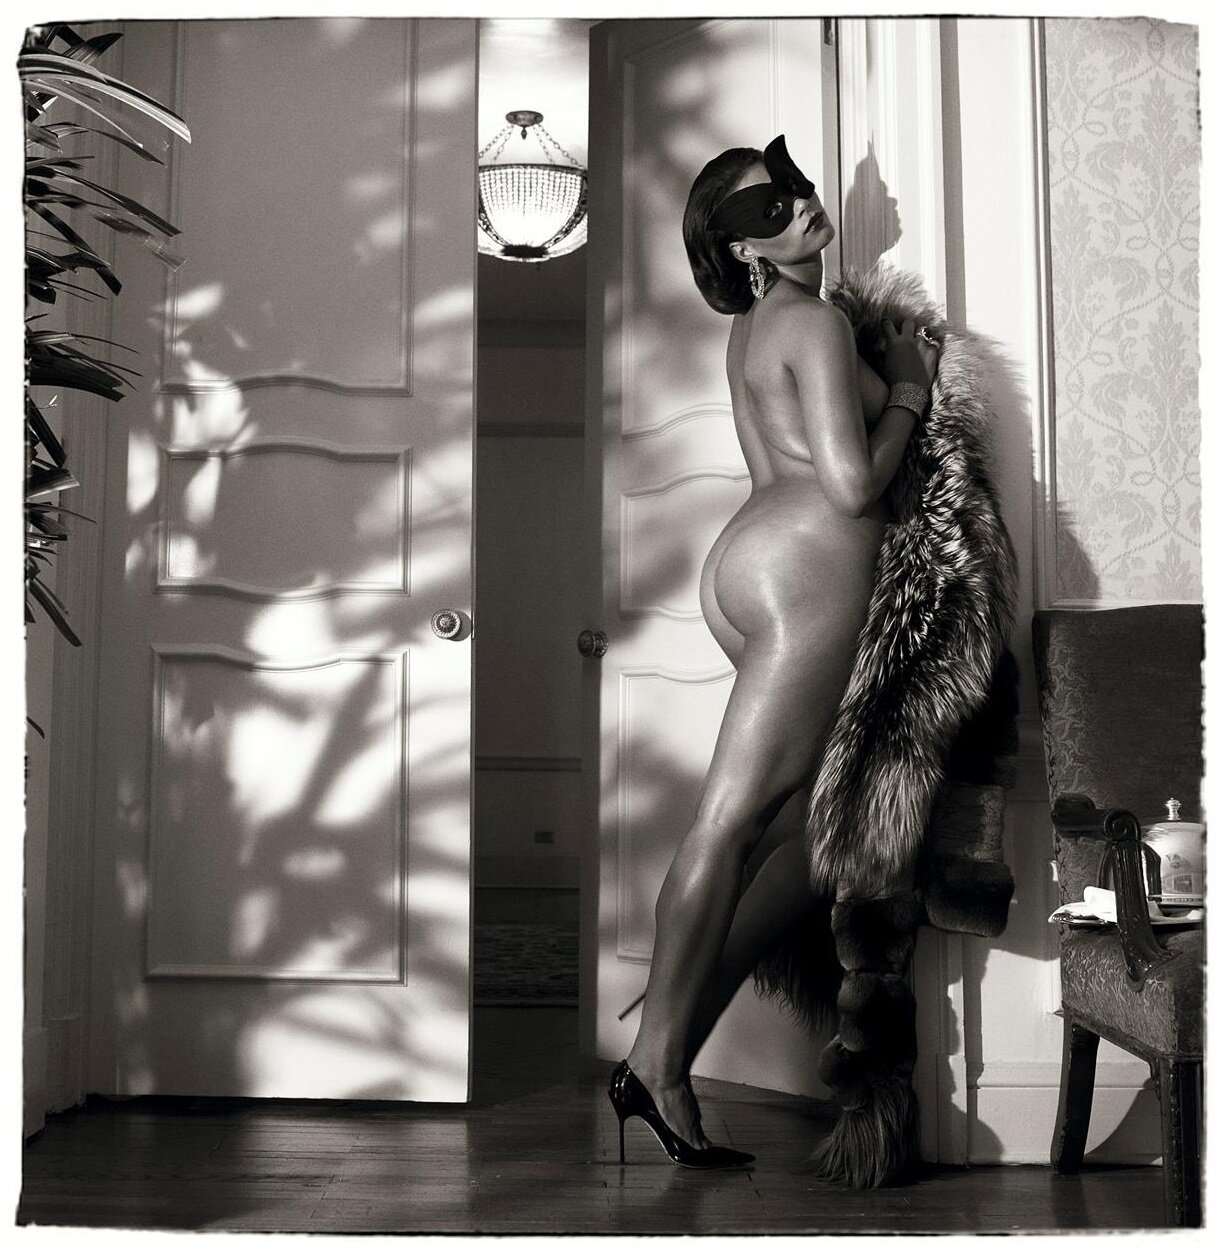 1-Steven Meisel, Edward Enninful 'Sogno Di Donna' for Vogue Italia June 2011 (6).jpg